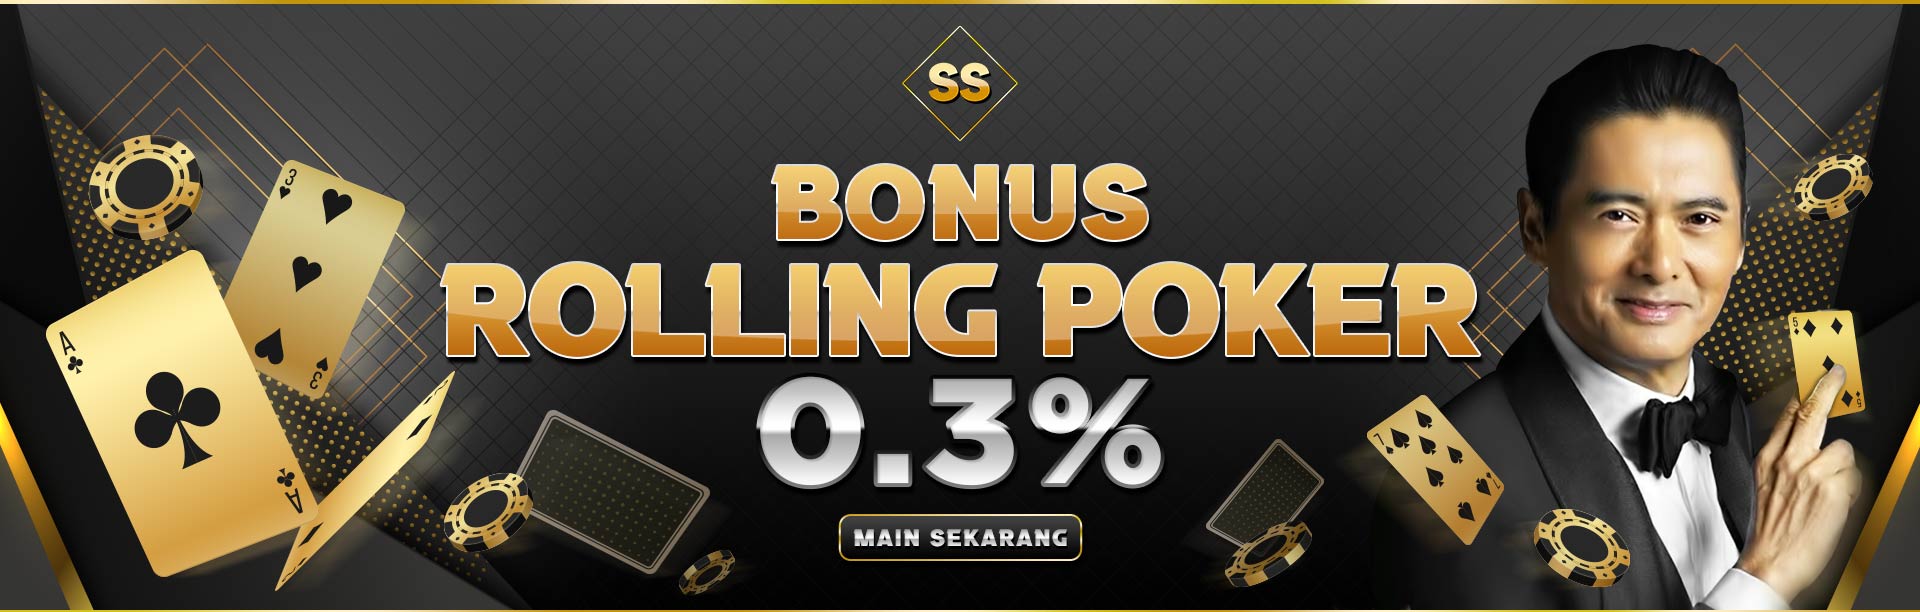 Bonus ROLLINGAN POKER 0,3%